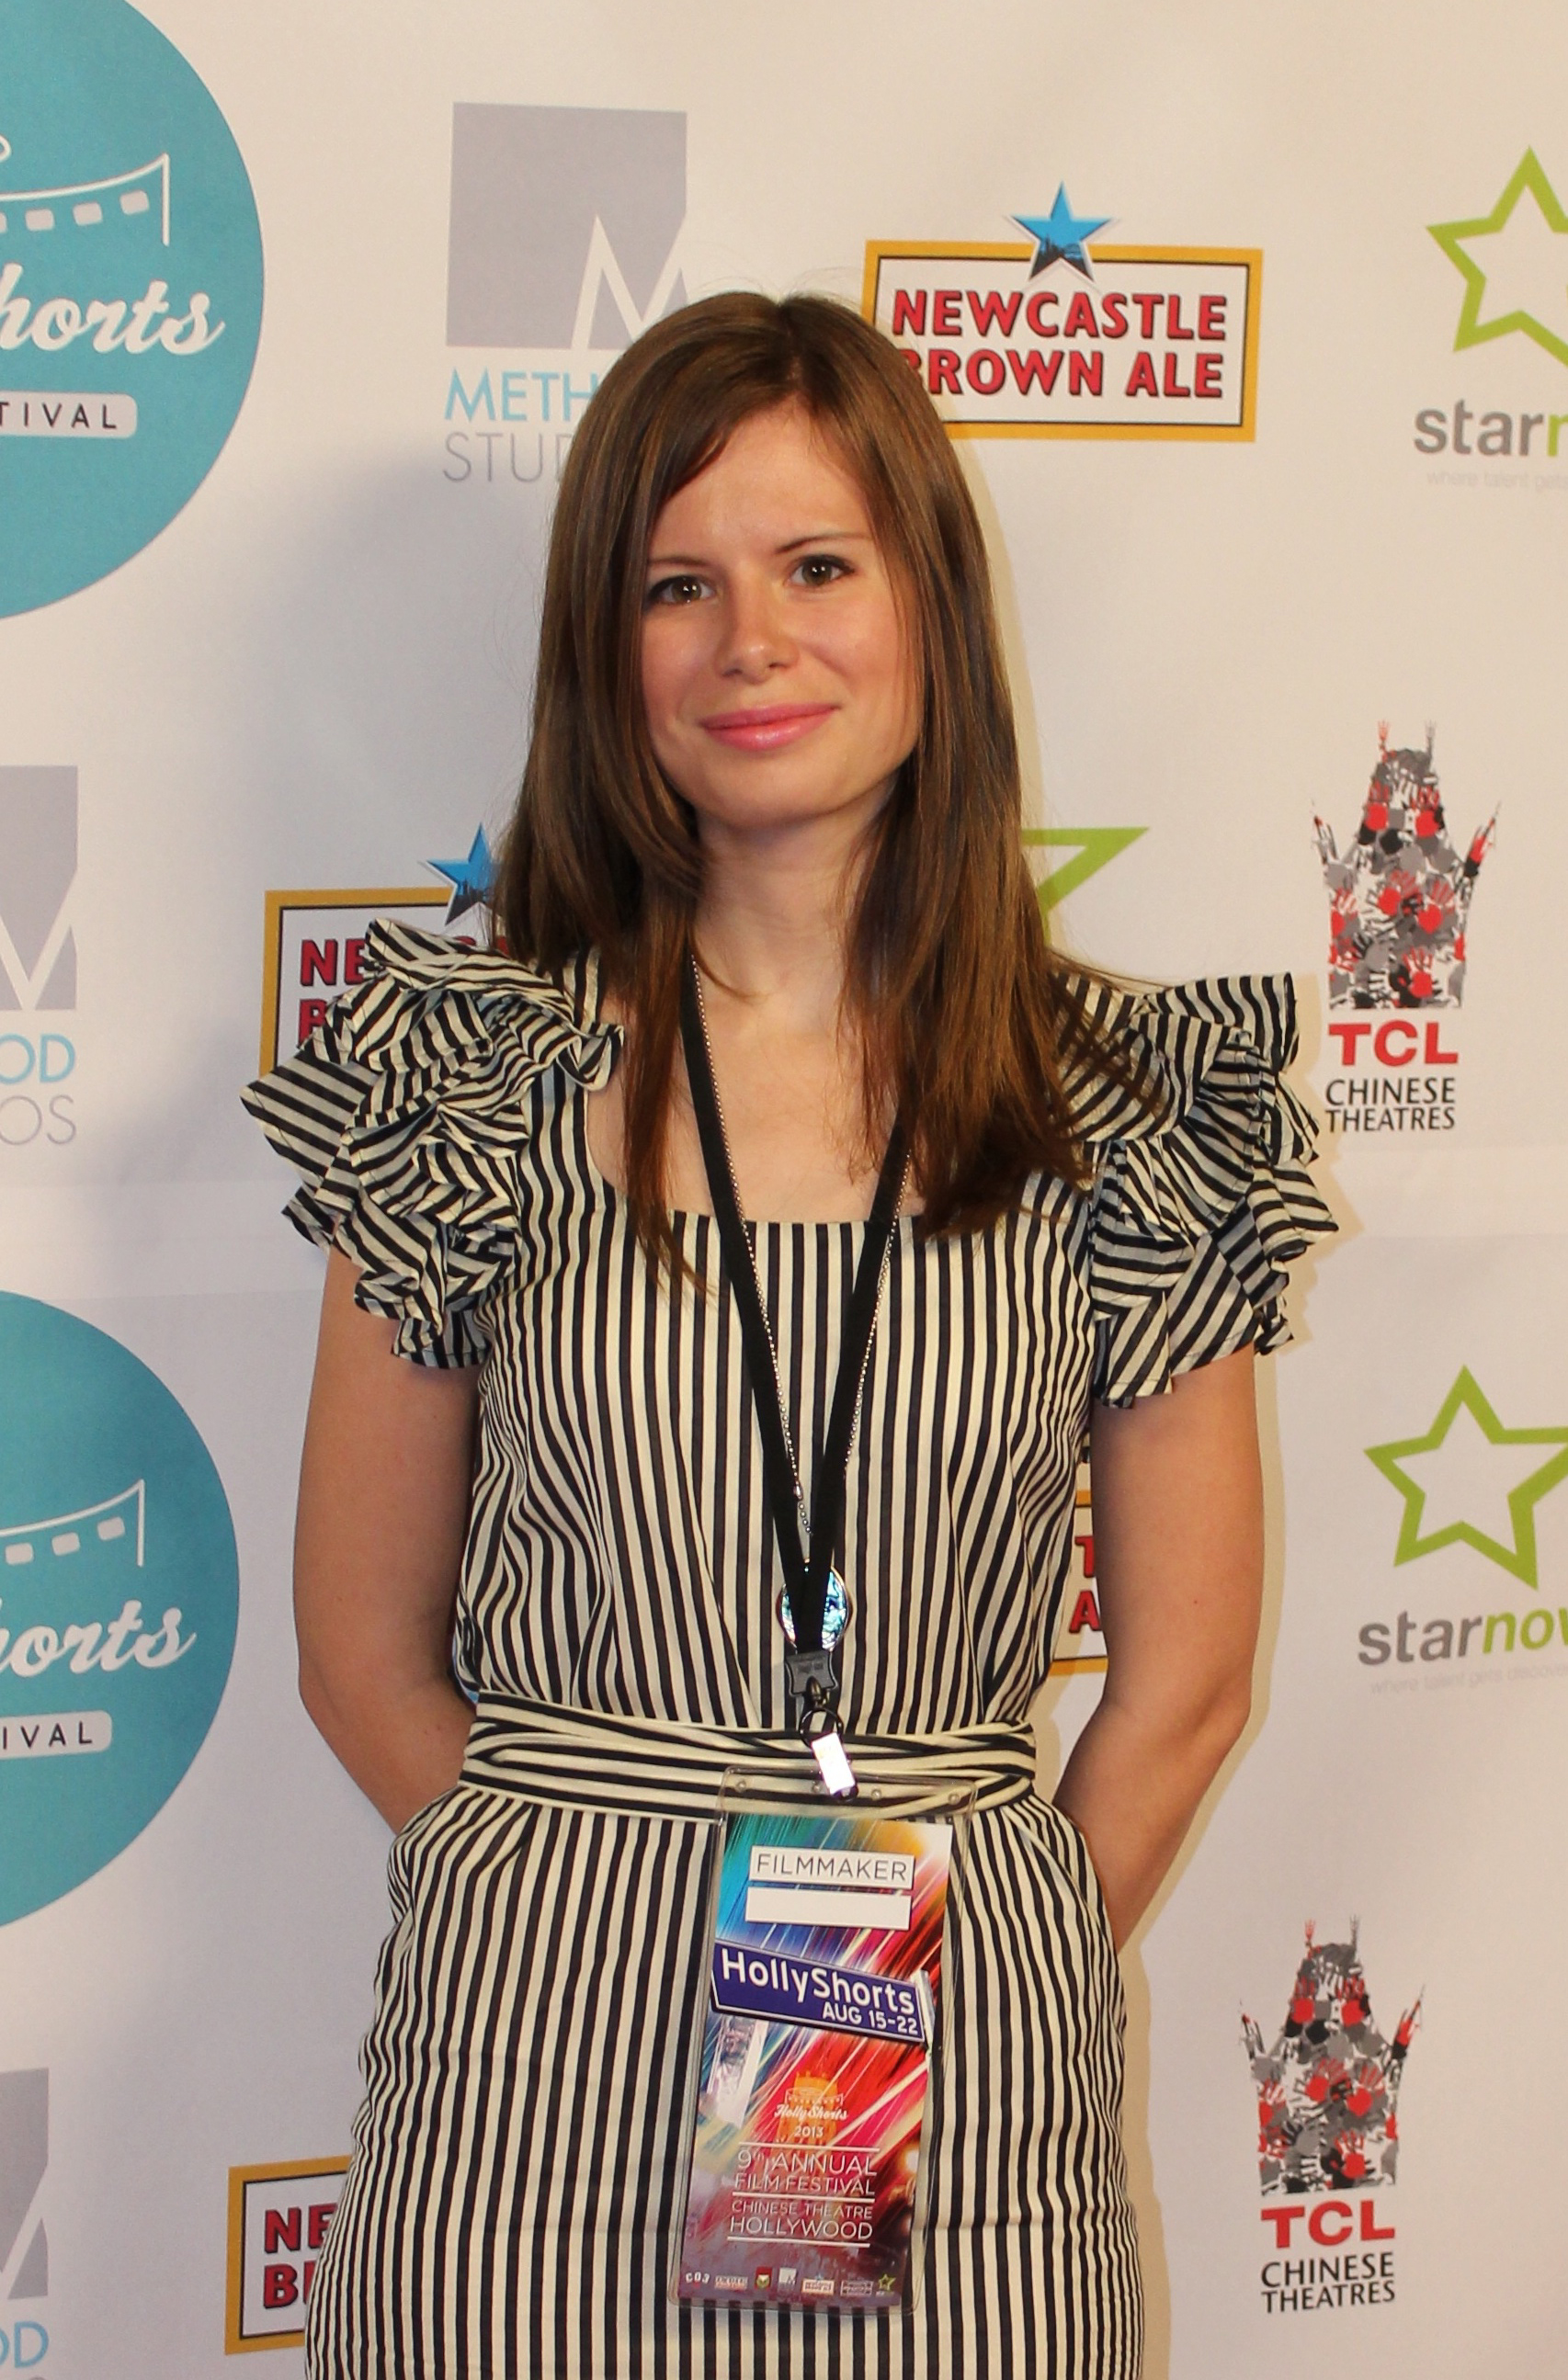 World Premier of CUDDLE at the 2013 HollyShorts Film Festival.